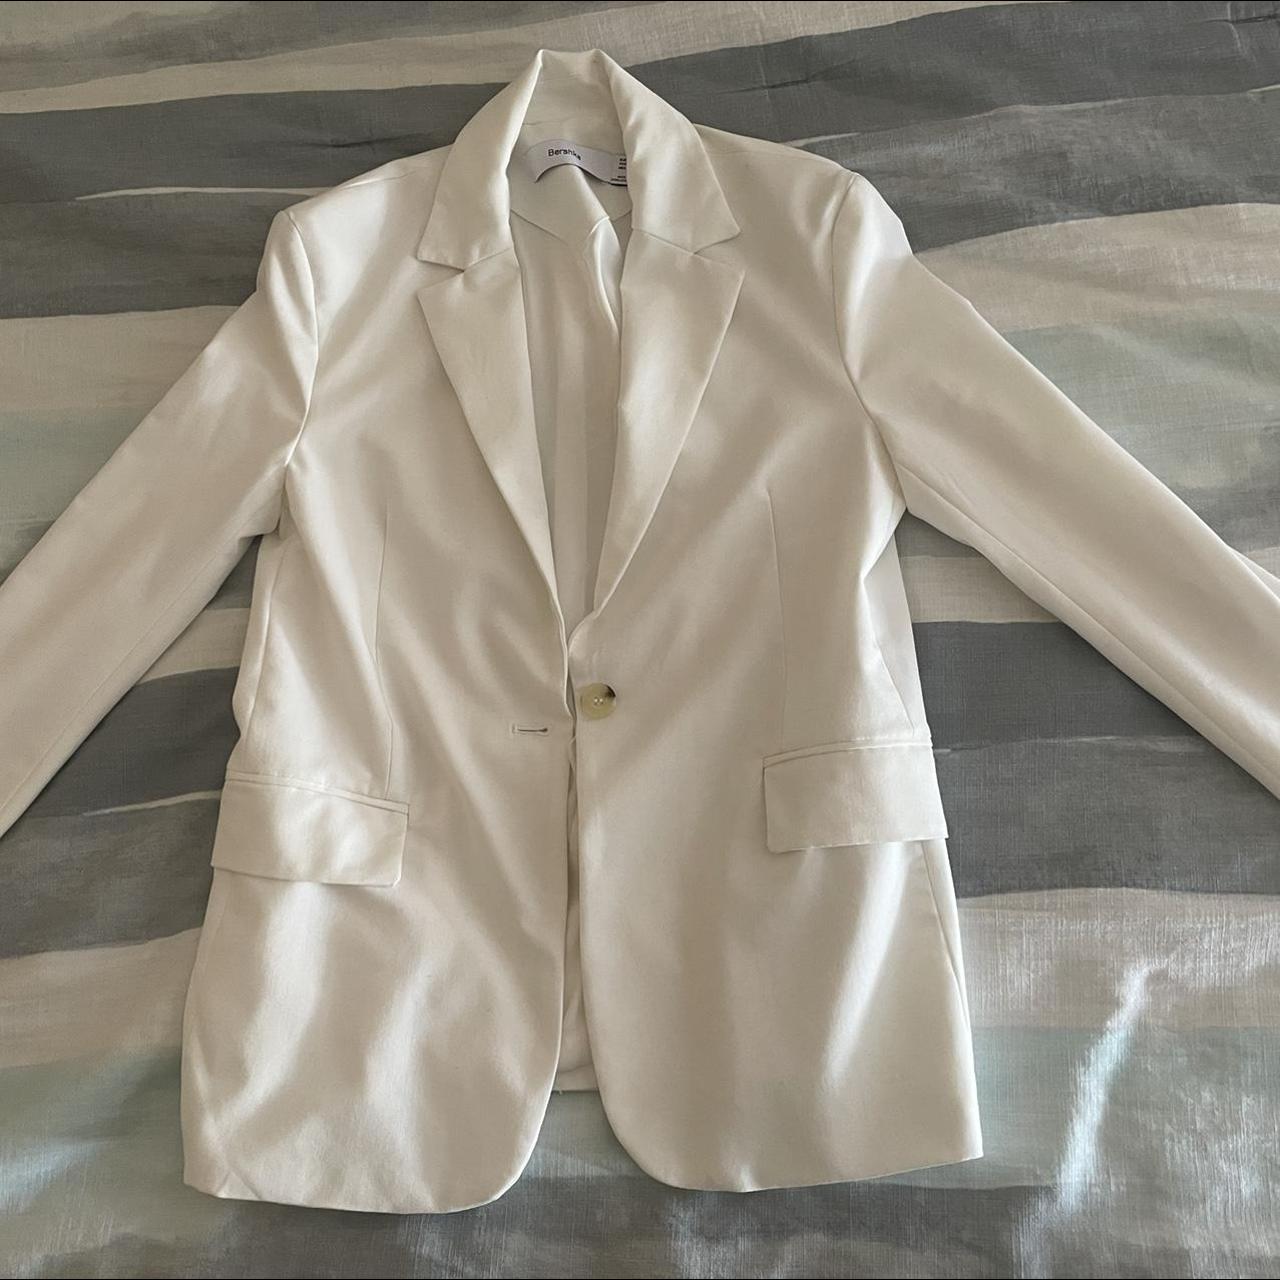 bershka white blazer - repop, i worn it once to a... - Depop